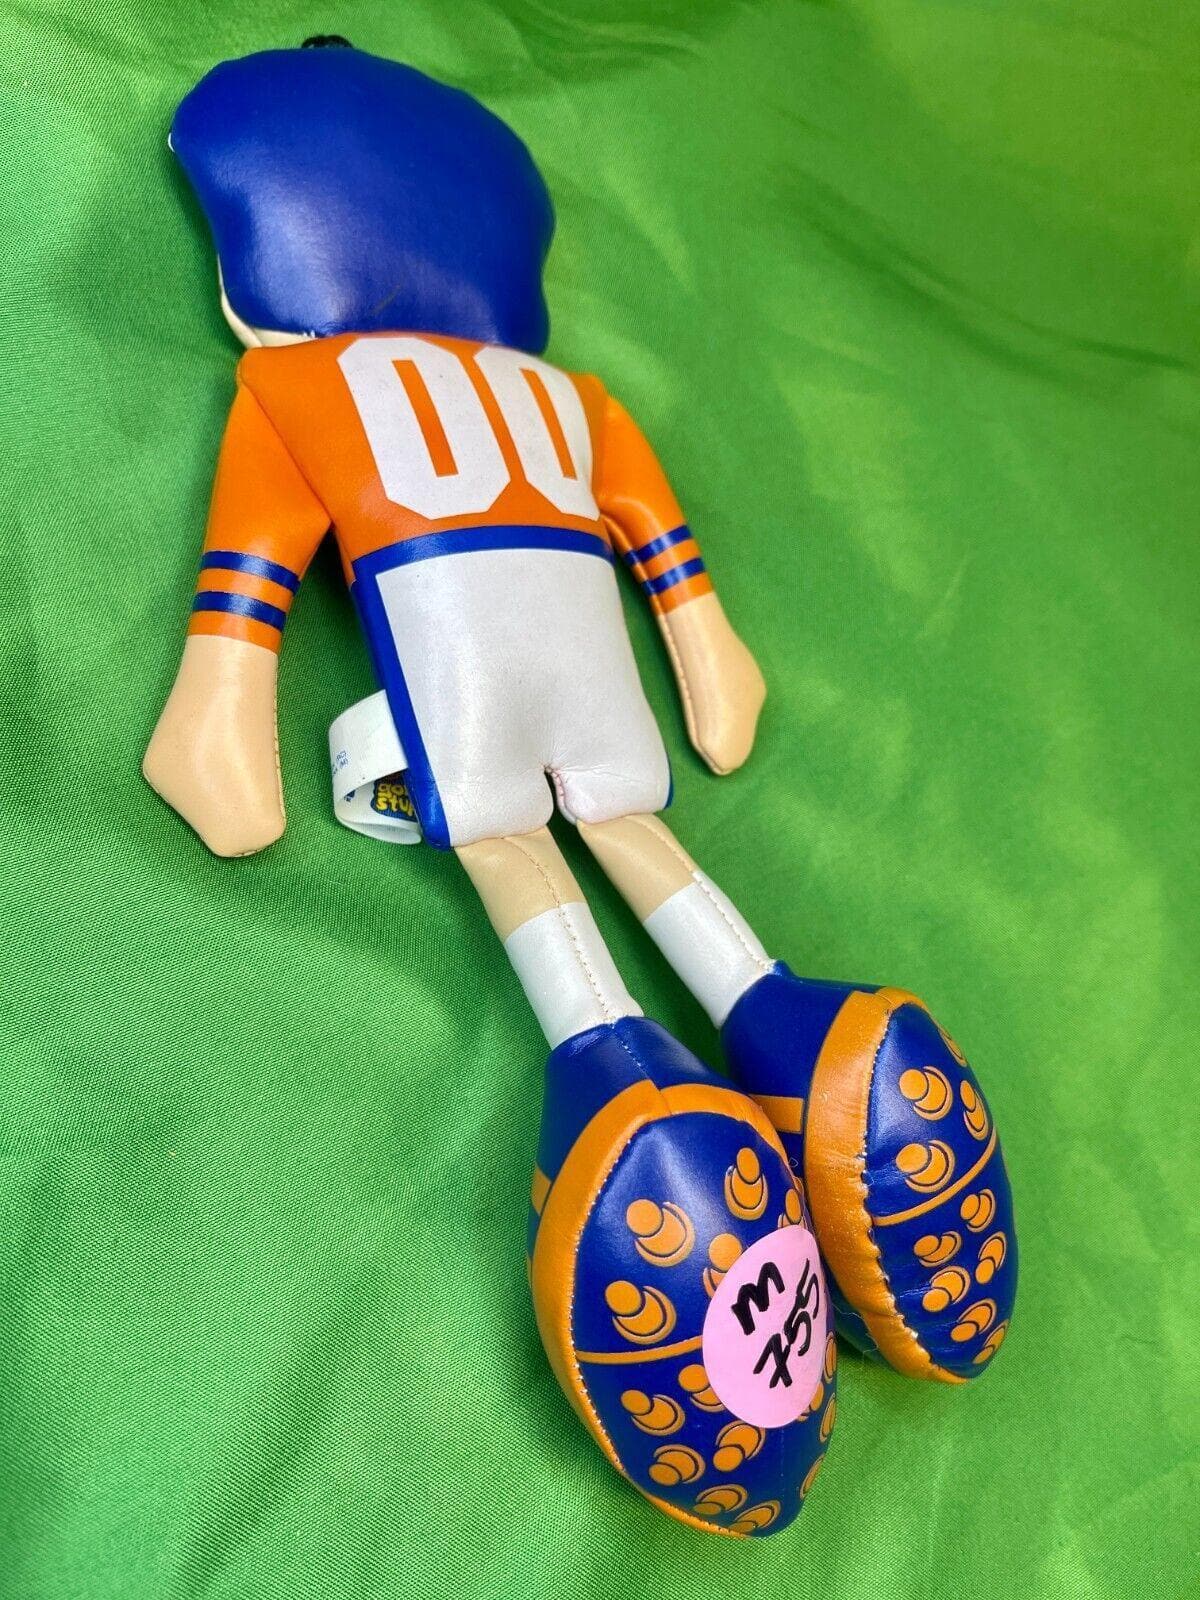 NFL Denver Broncos Vintage Plastic Cuddly Toy  Ornament 1995 Cute!